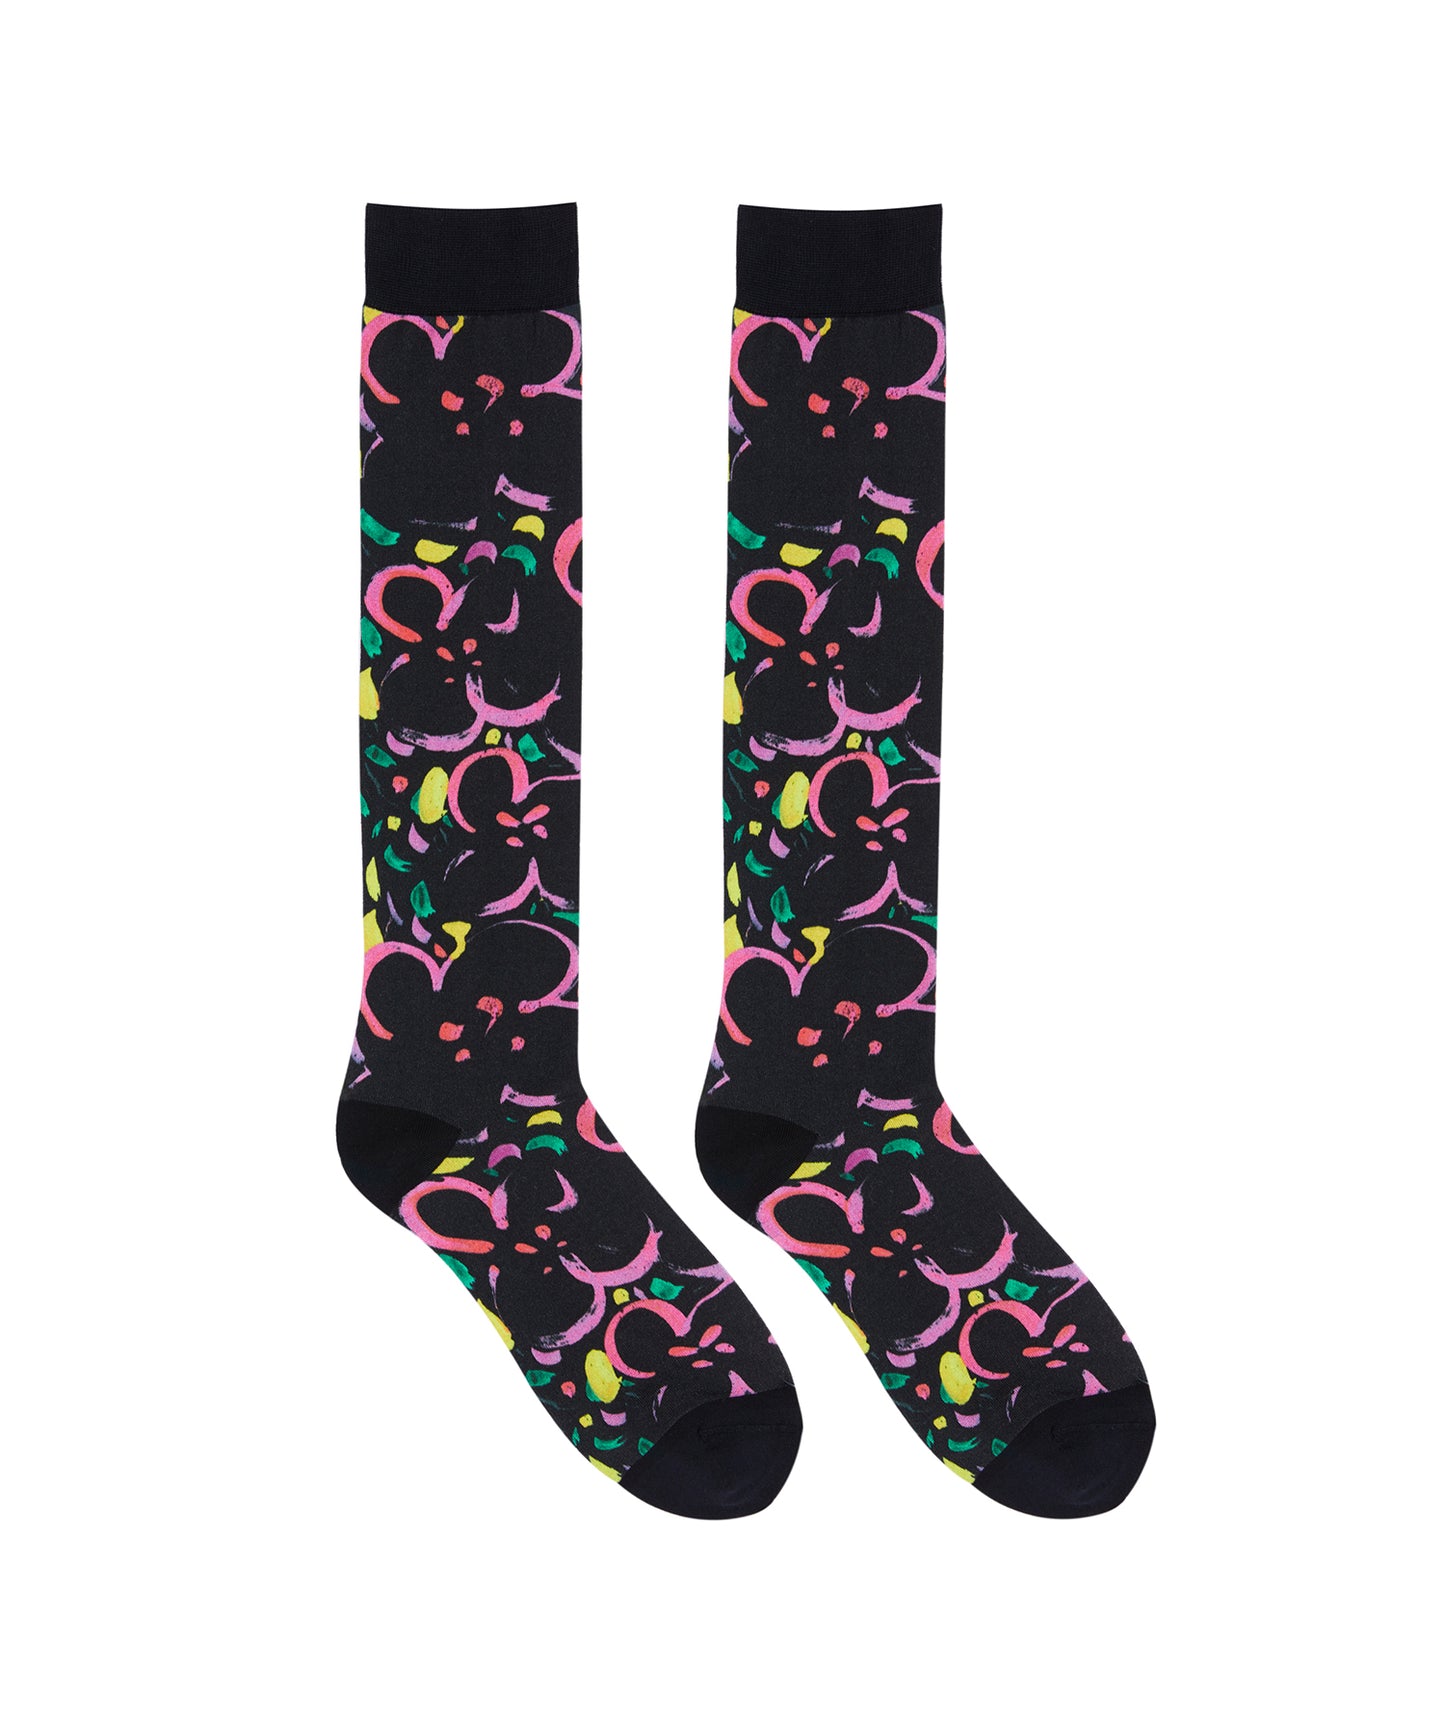 Blossom Brightness Knee-high Socks